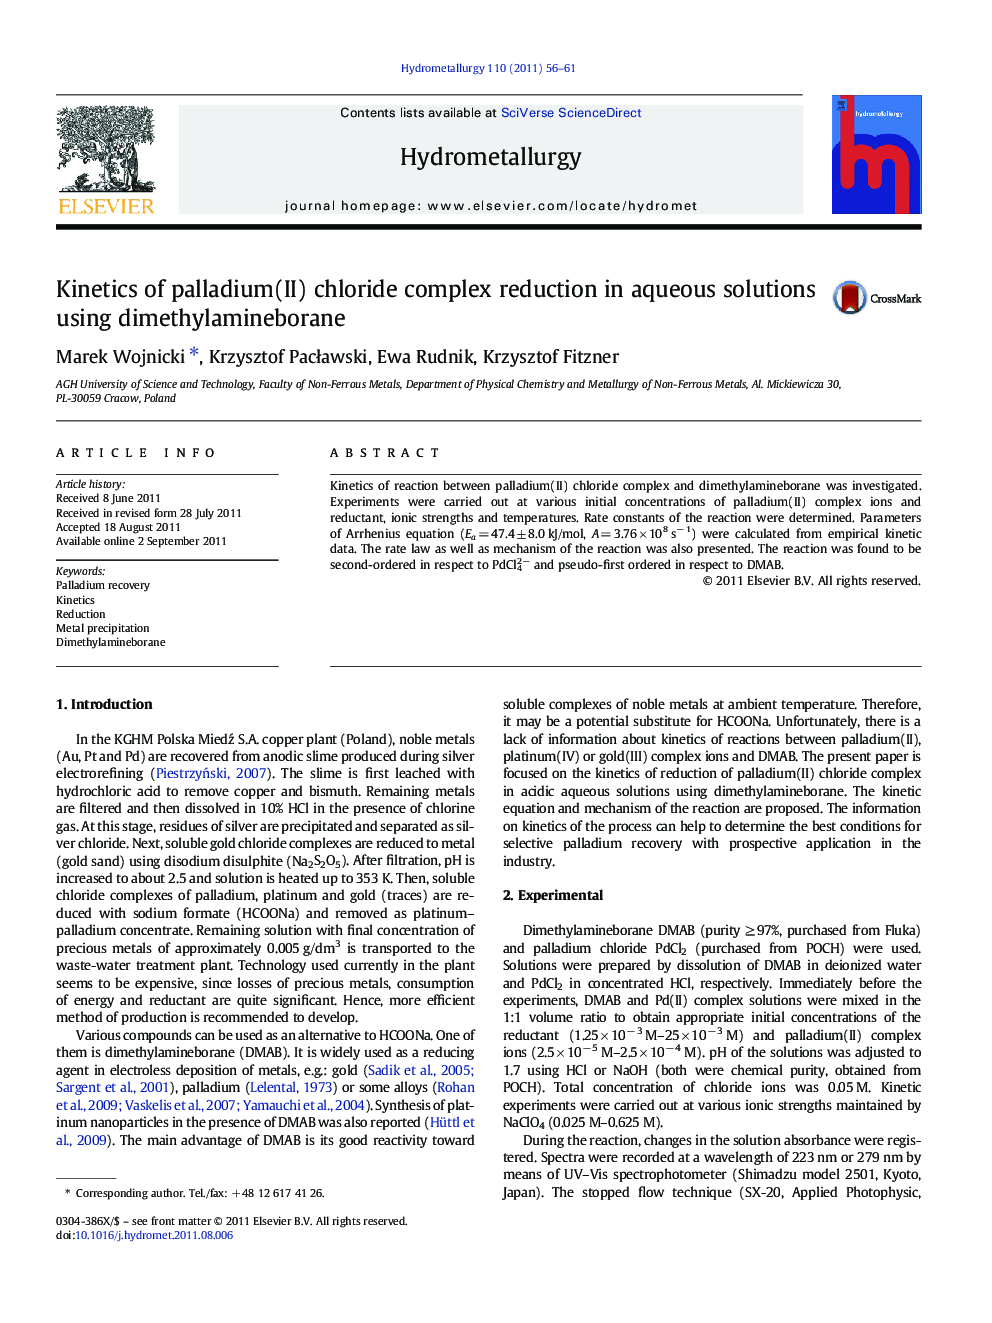 Kinetics of palladium(II) chloride complex reduction in aqueous solutions using dimethylamineborane